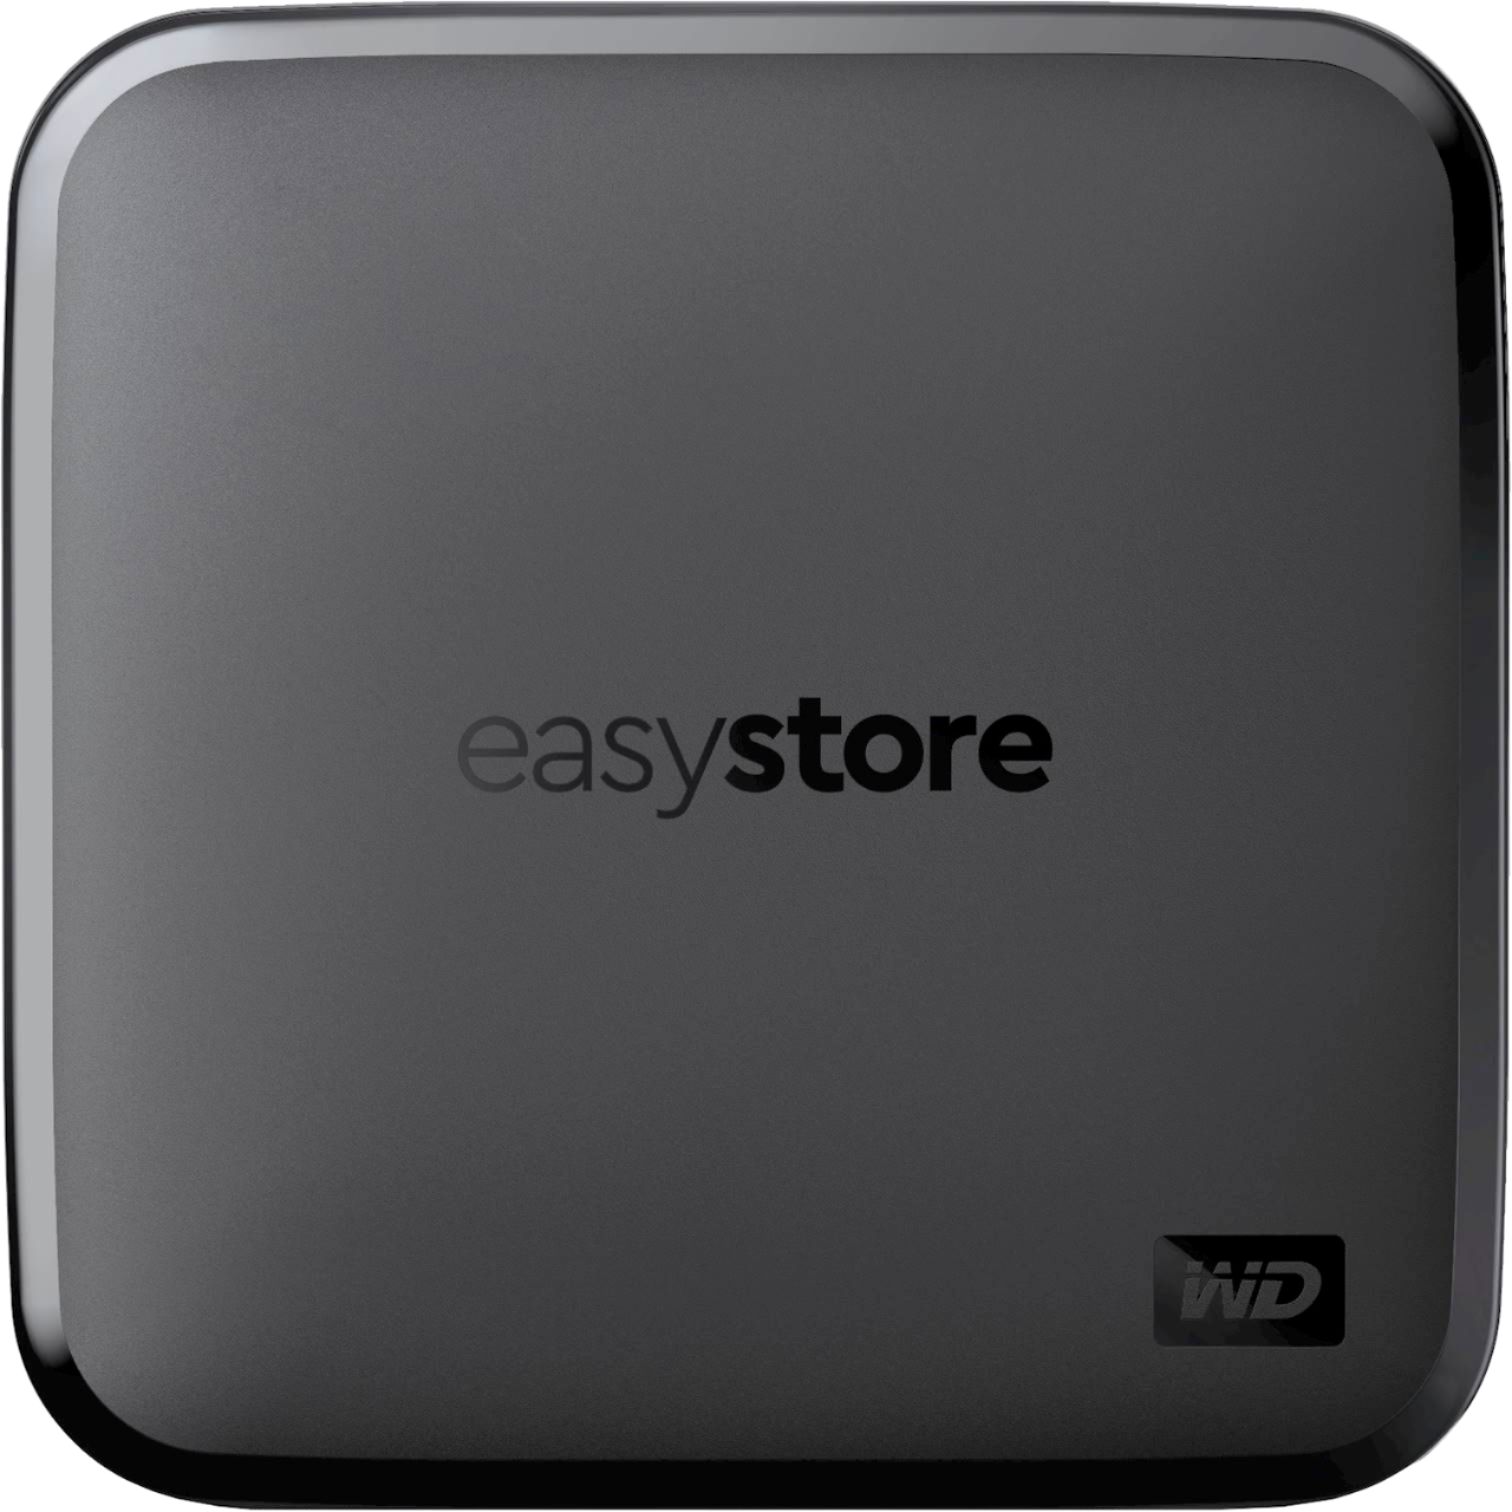 WD easystore 1TB External USB 3.0 Portable SSD Black WDBAYN0010BBK-WEBB - Buy